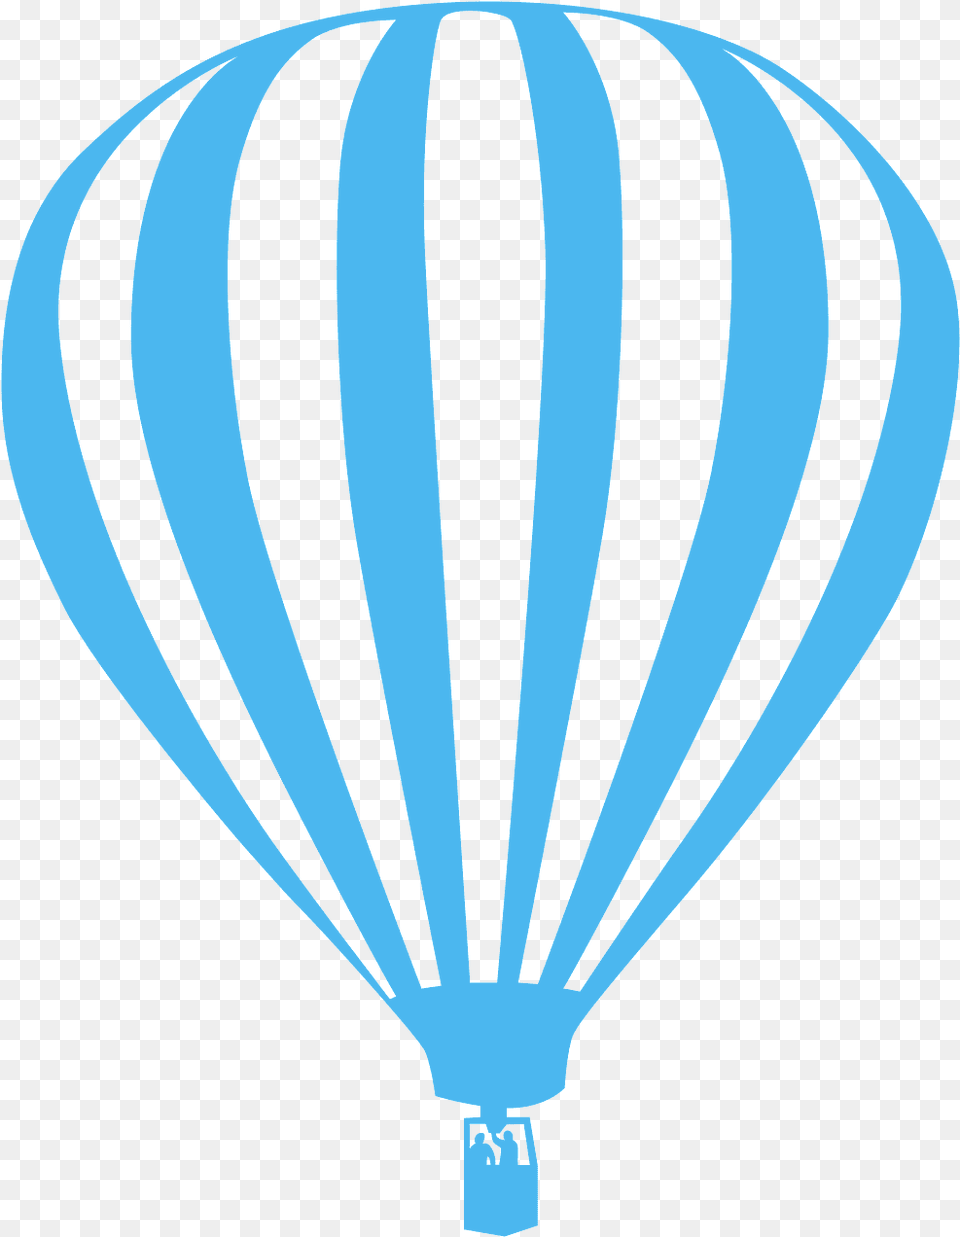 Tag Balo De Ar Quente, Aircraft, Hot Air Balloon, Transportation, Vehicle Free Png Download